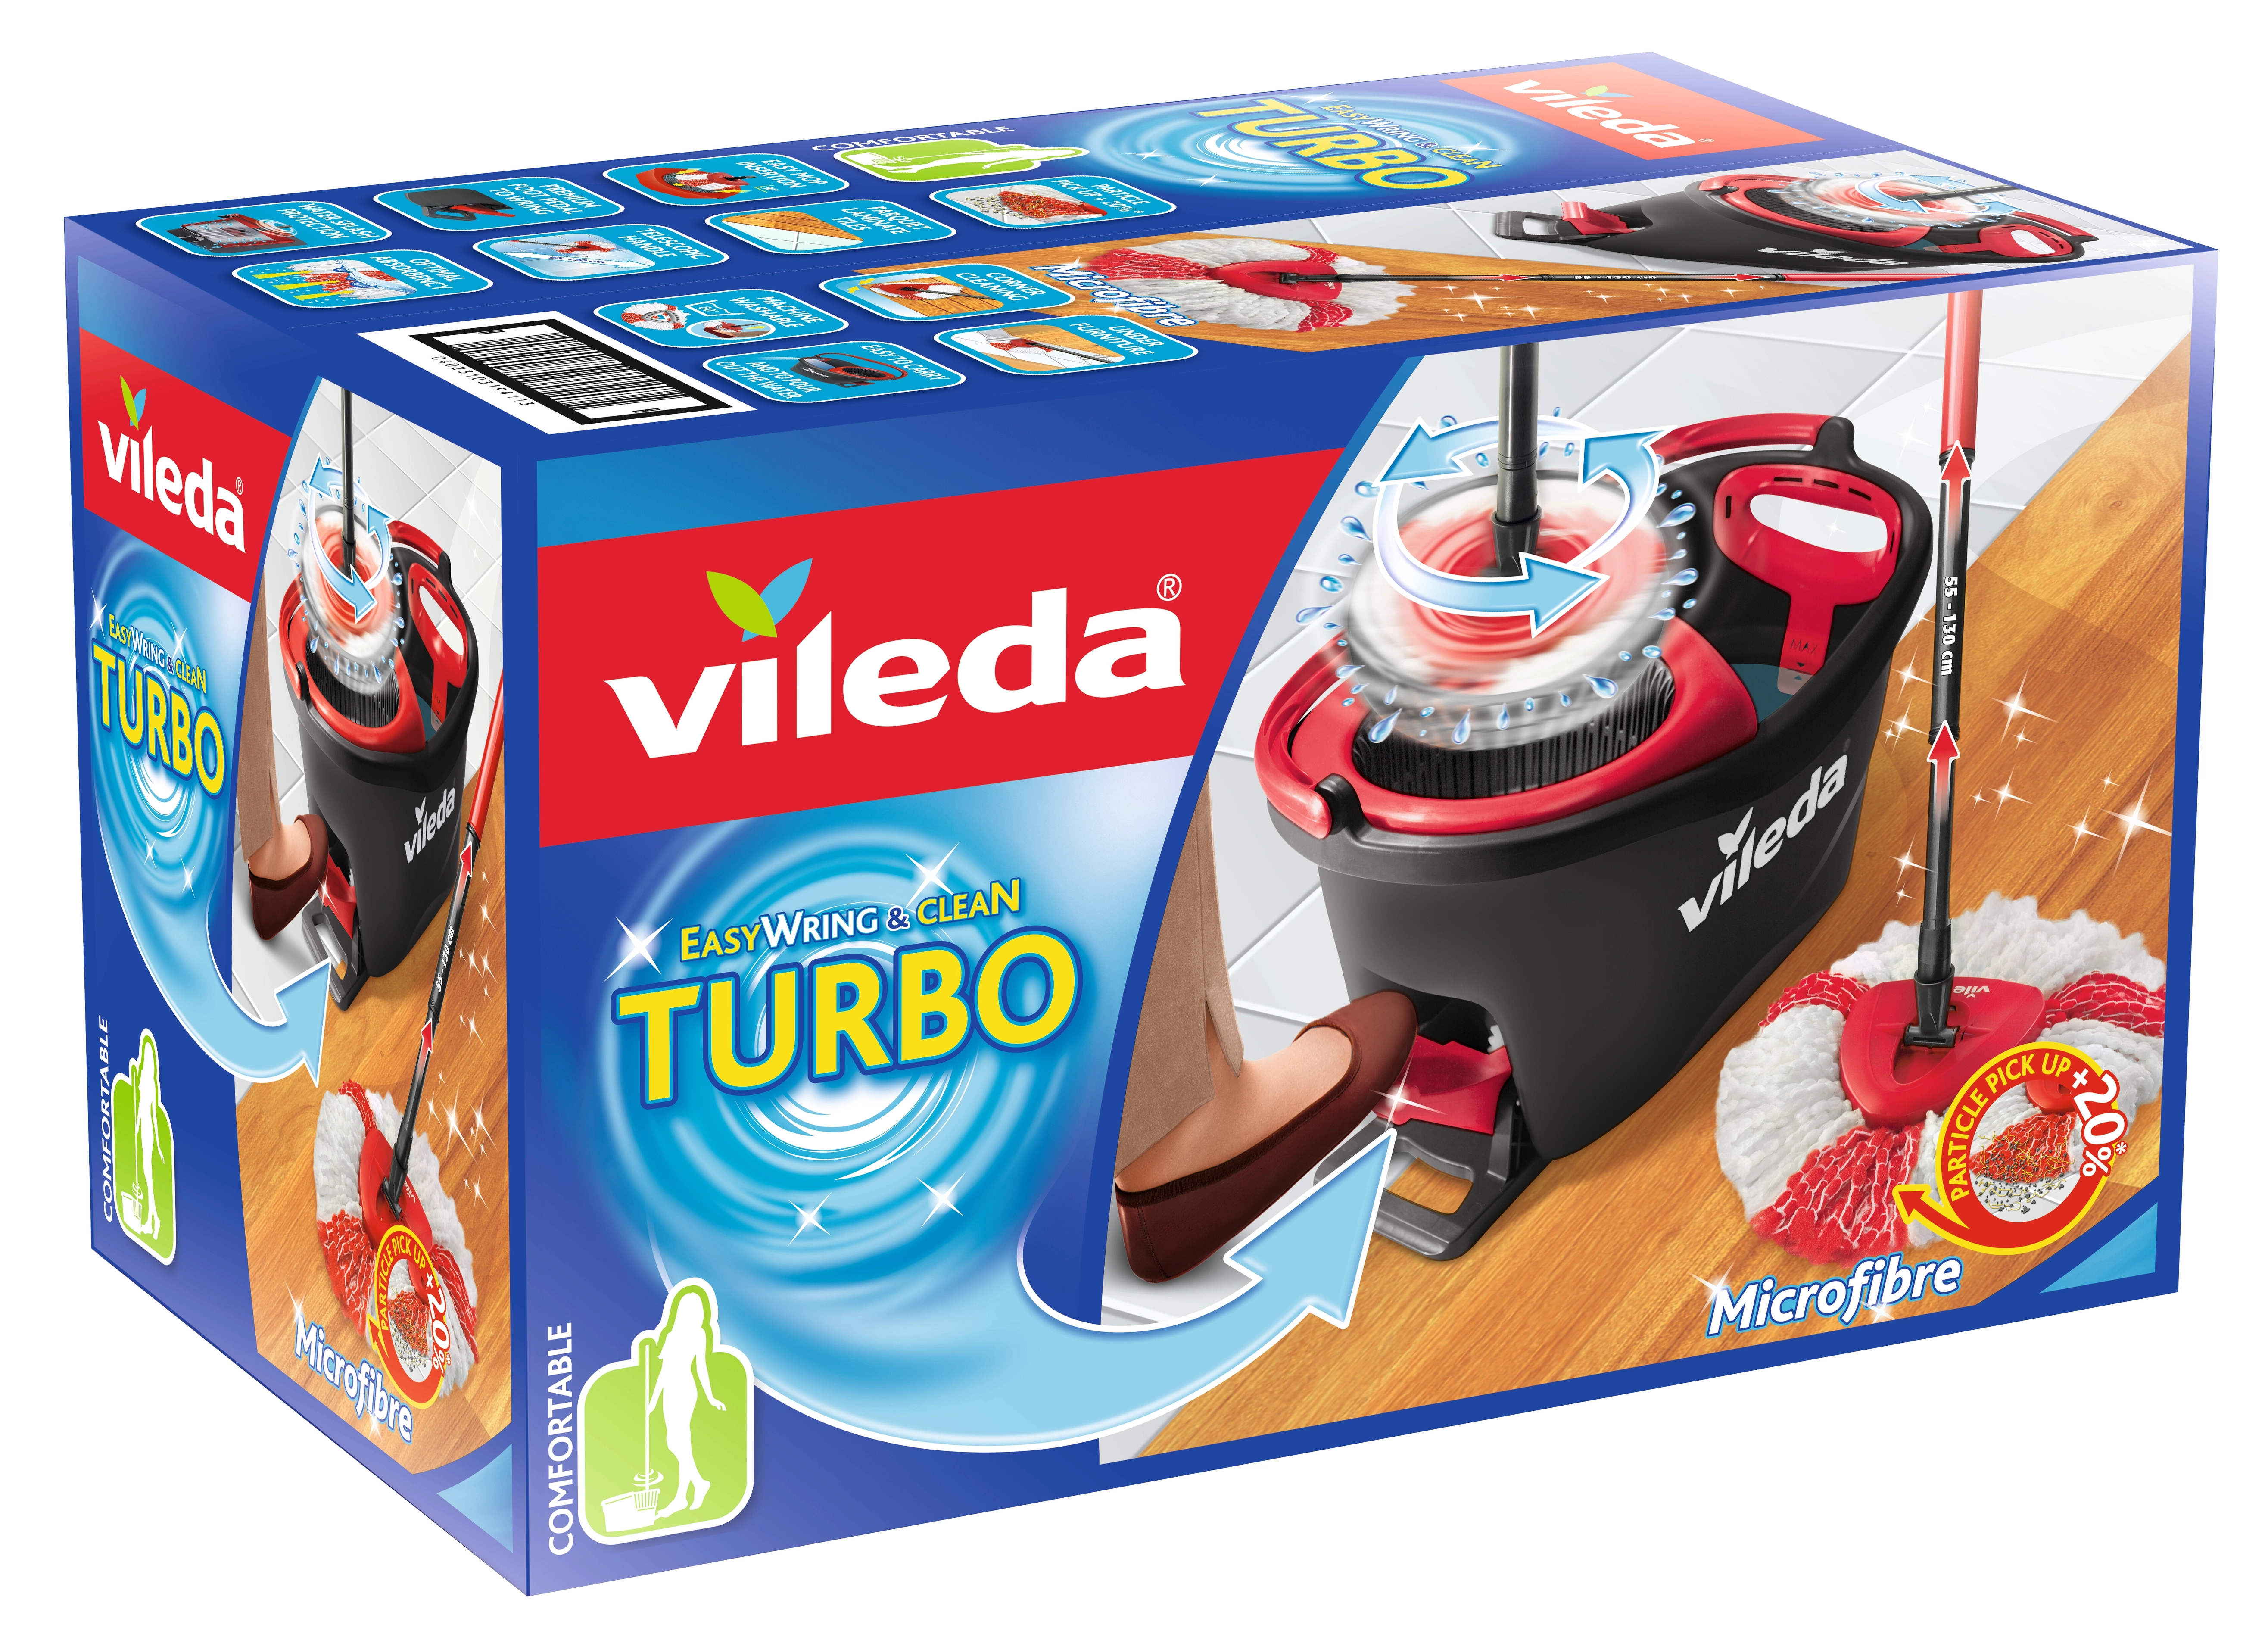 VILEDA Mocio Turbo EasyWring and Clean Set acquisto online in modo